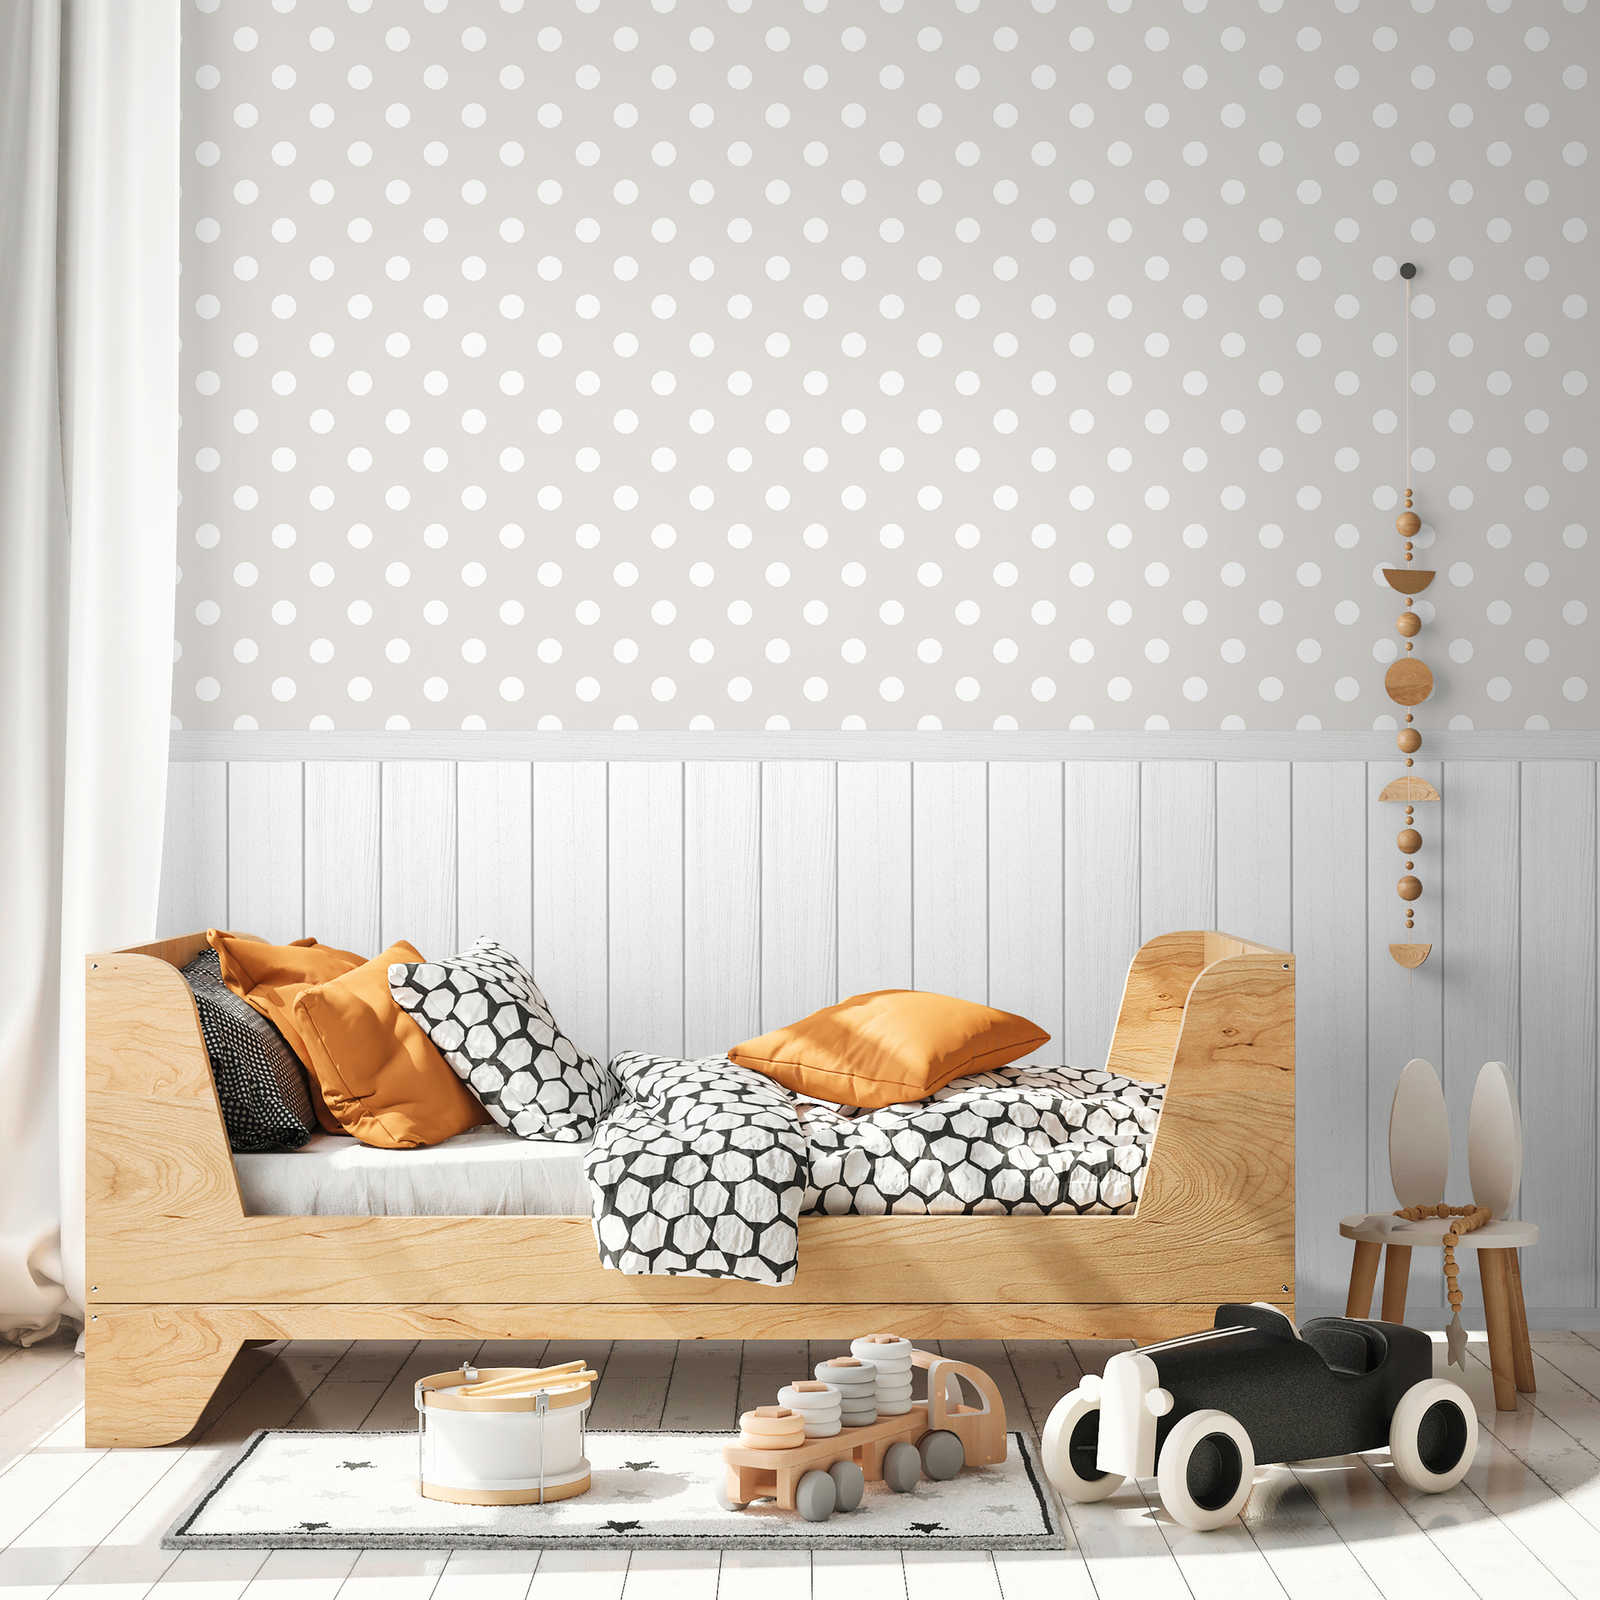 Non-woven motif wallpaper with wood-effect plinth border and dot pattern - white, grey
